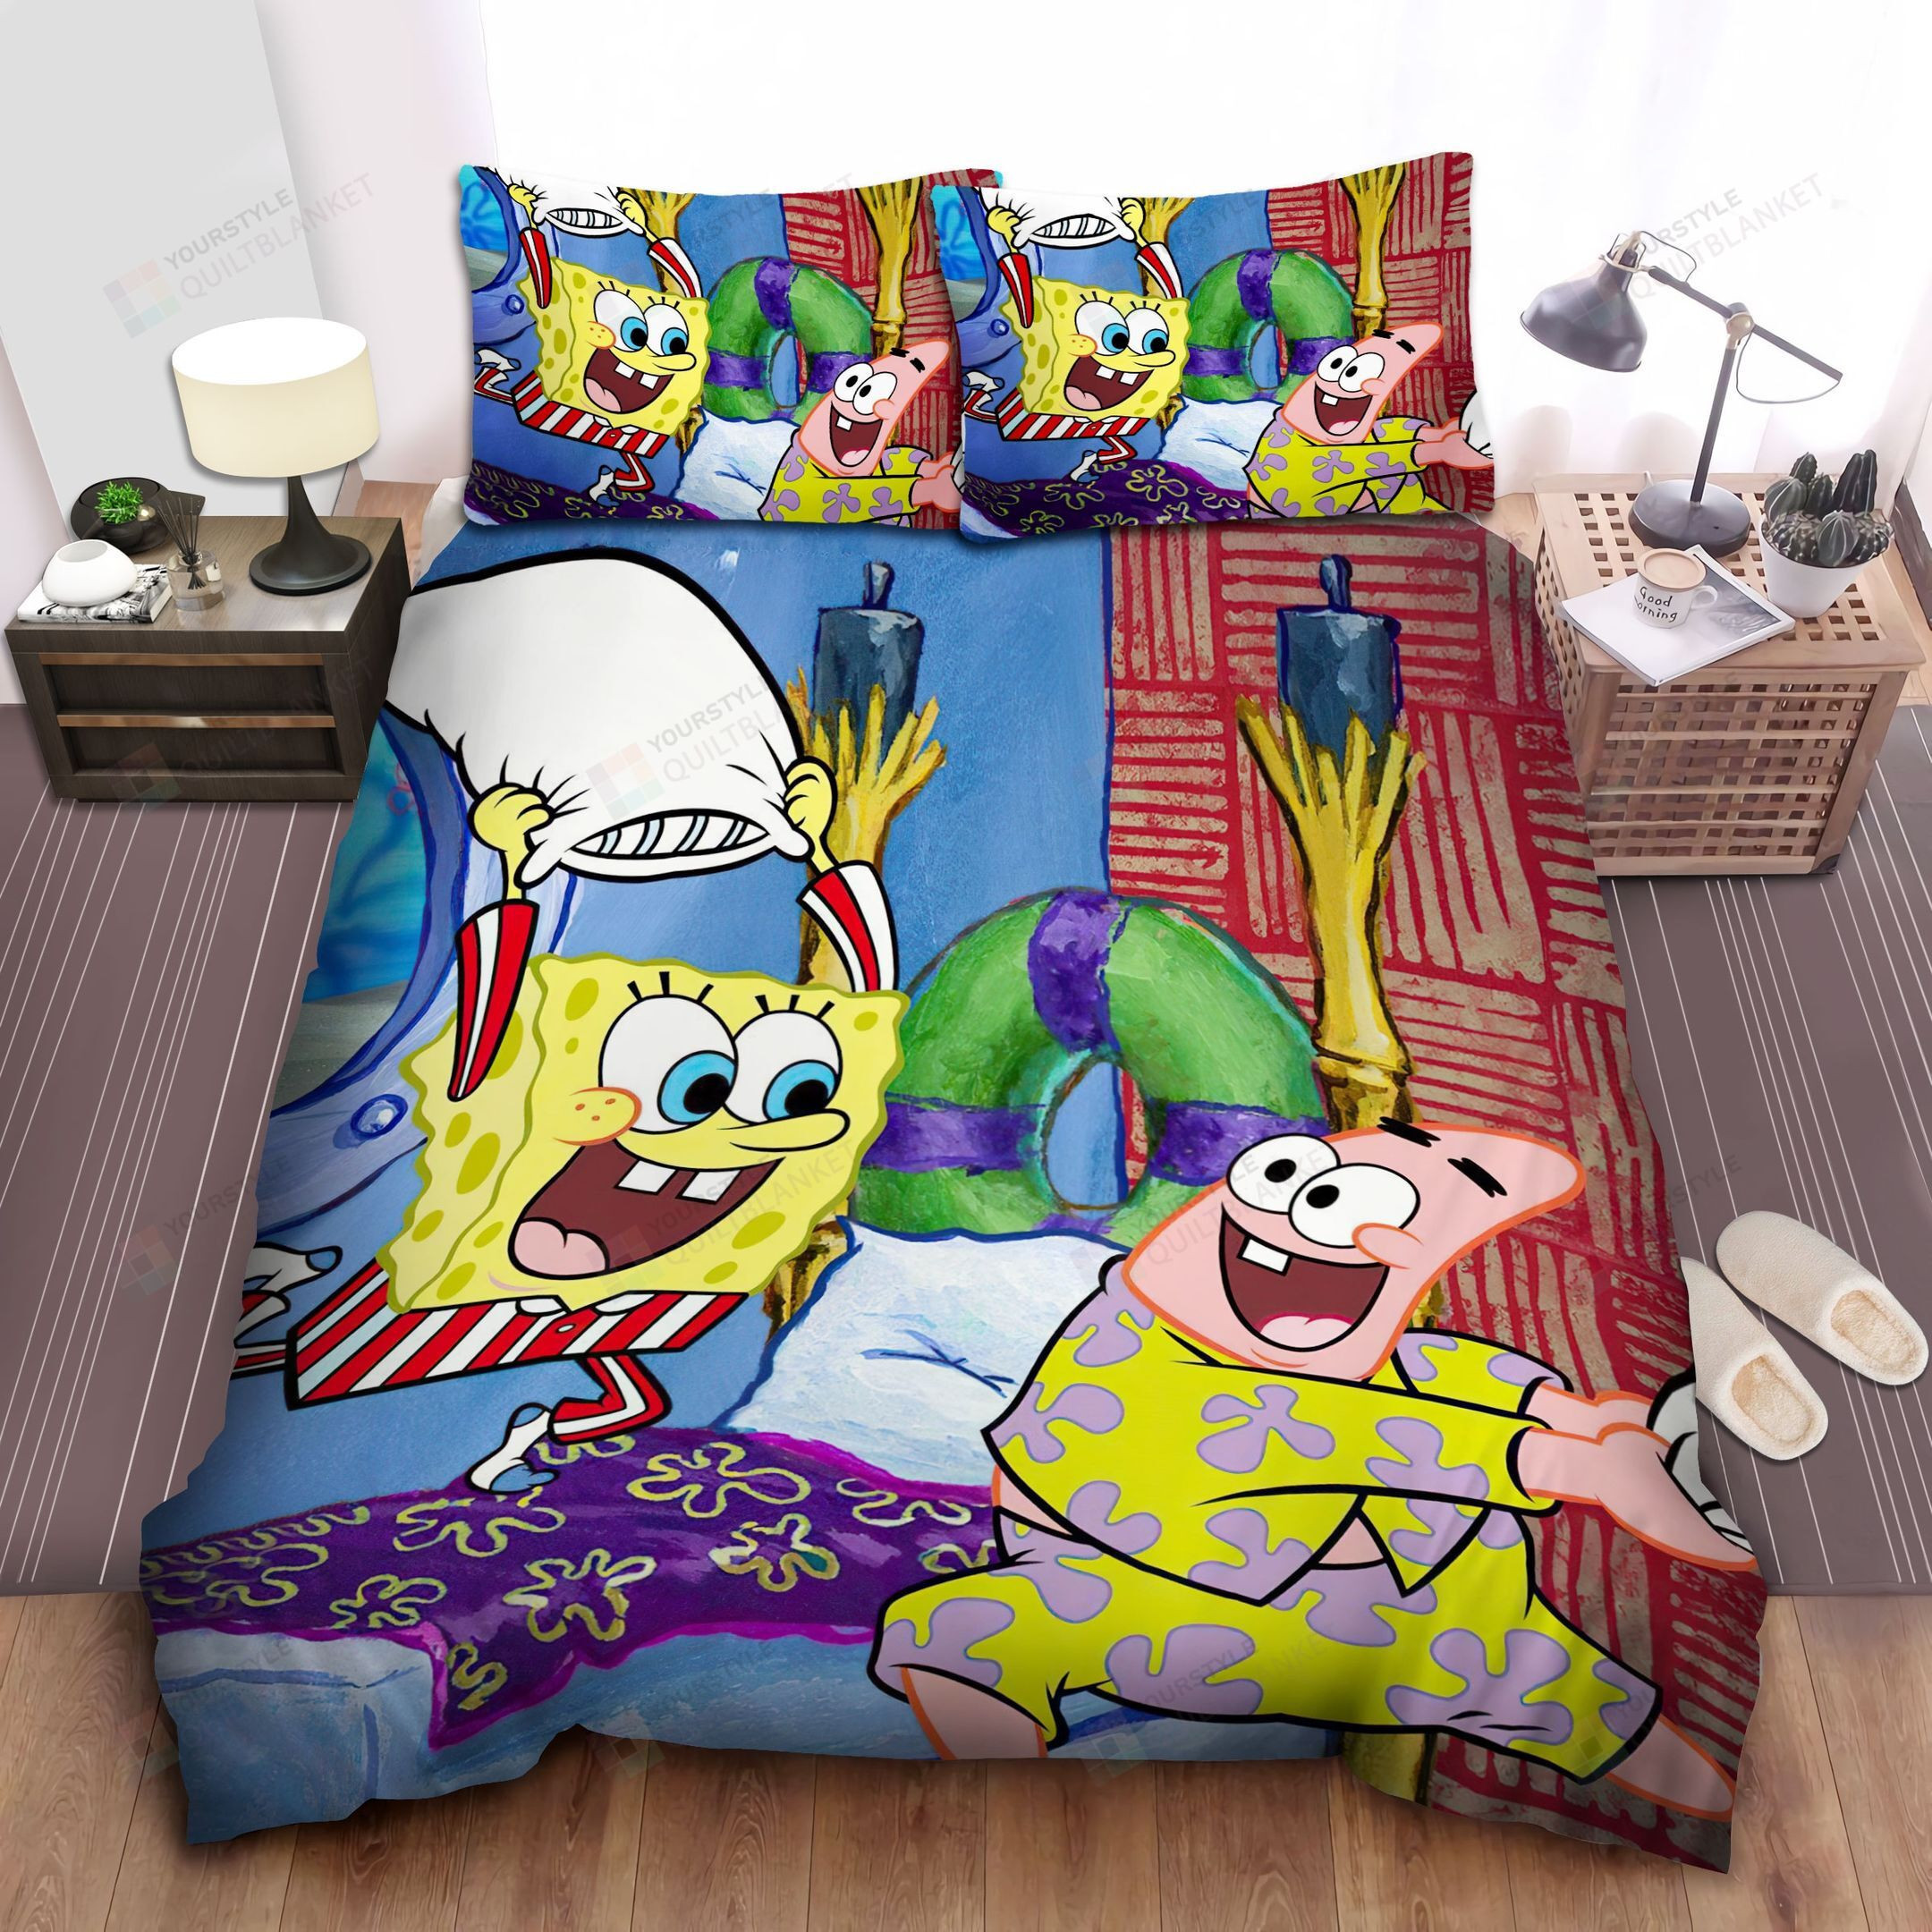 Spongebob Squarepants Sleeping Party With Patrick Star Bed Sheets